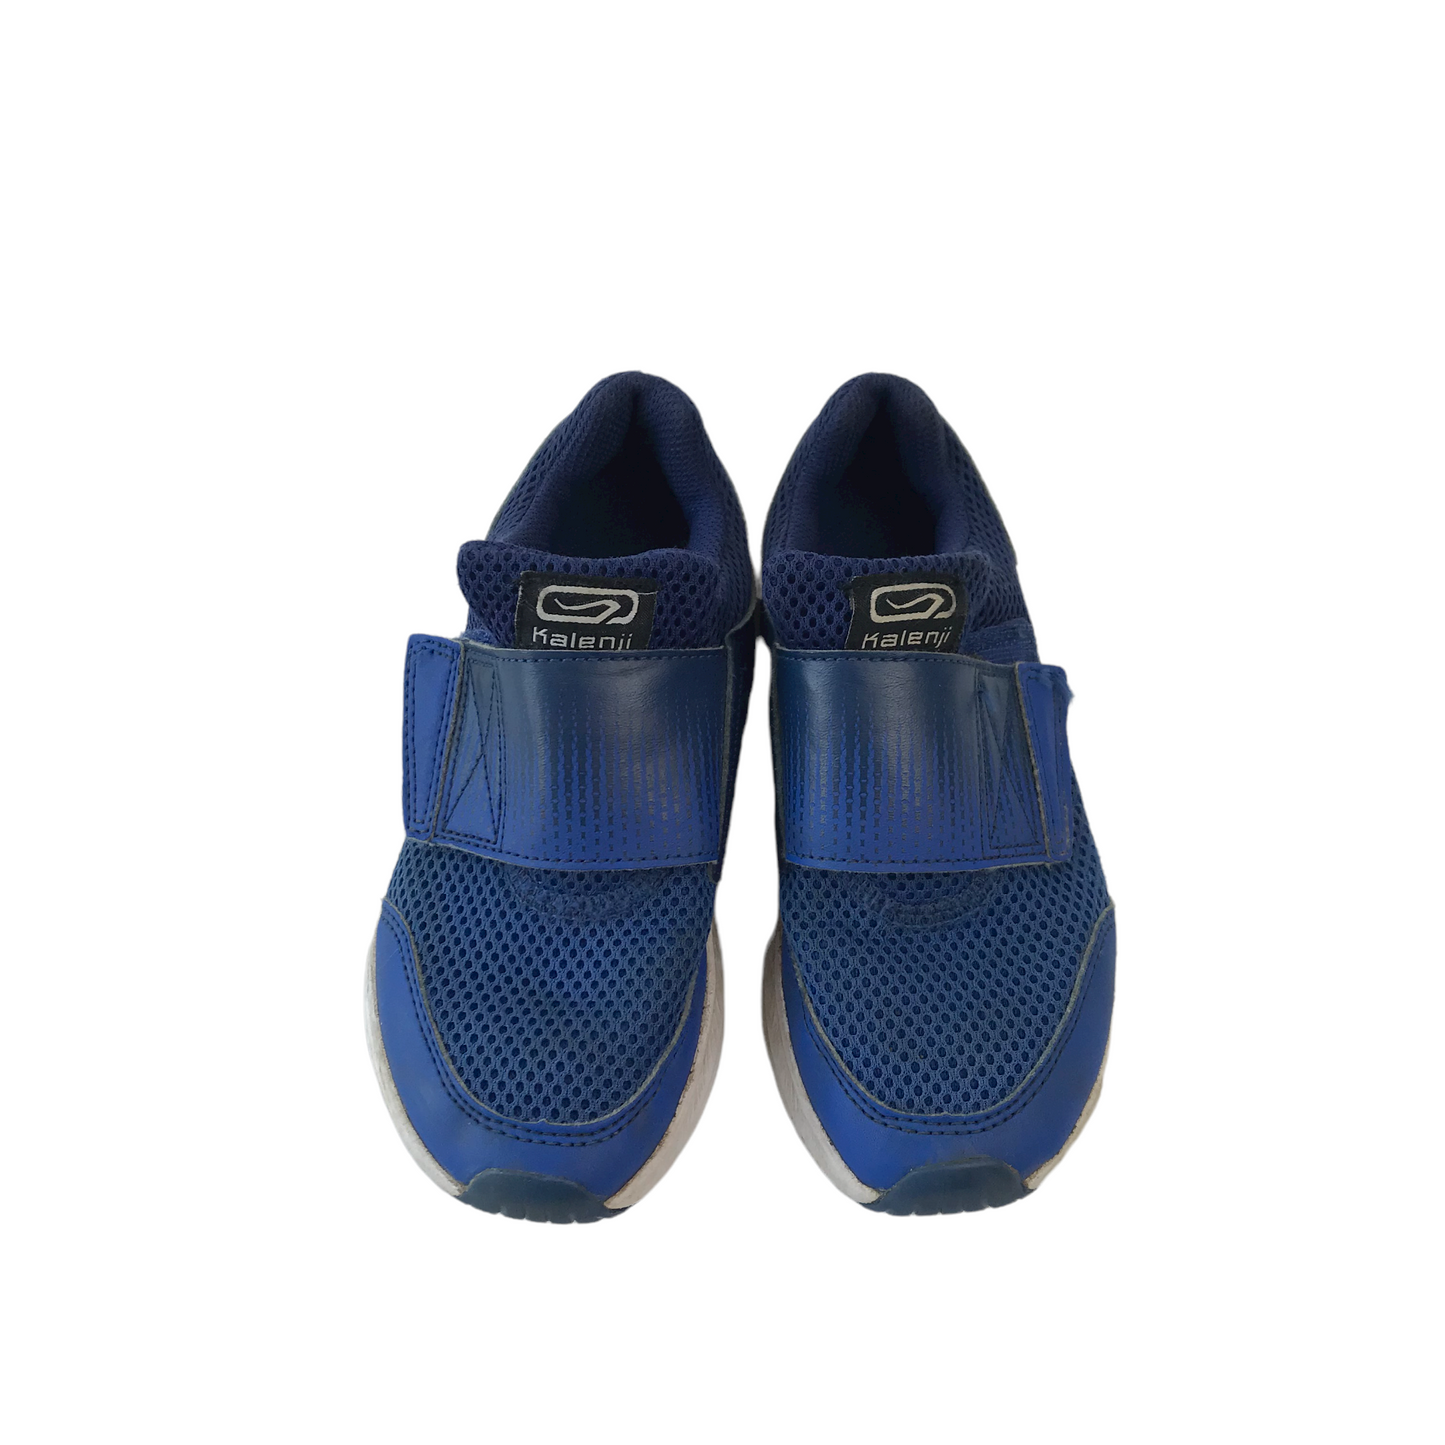 Kalenji Royal Blue Trainers with Straps Shoe Size 12 (jr)